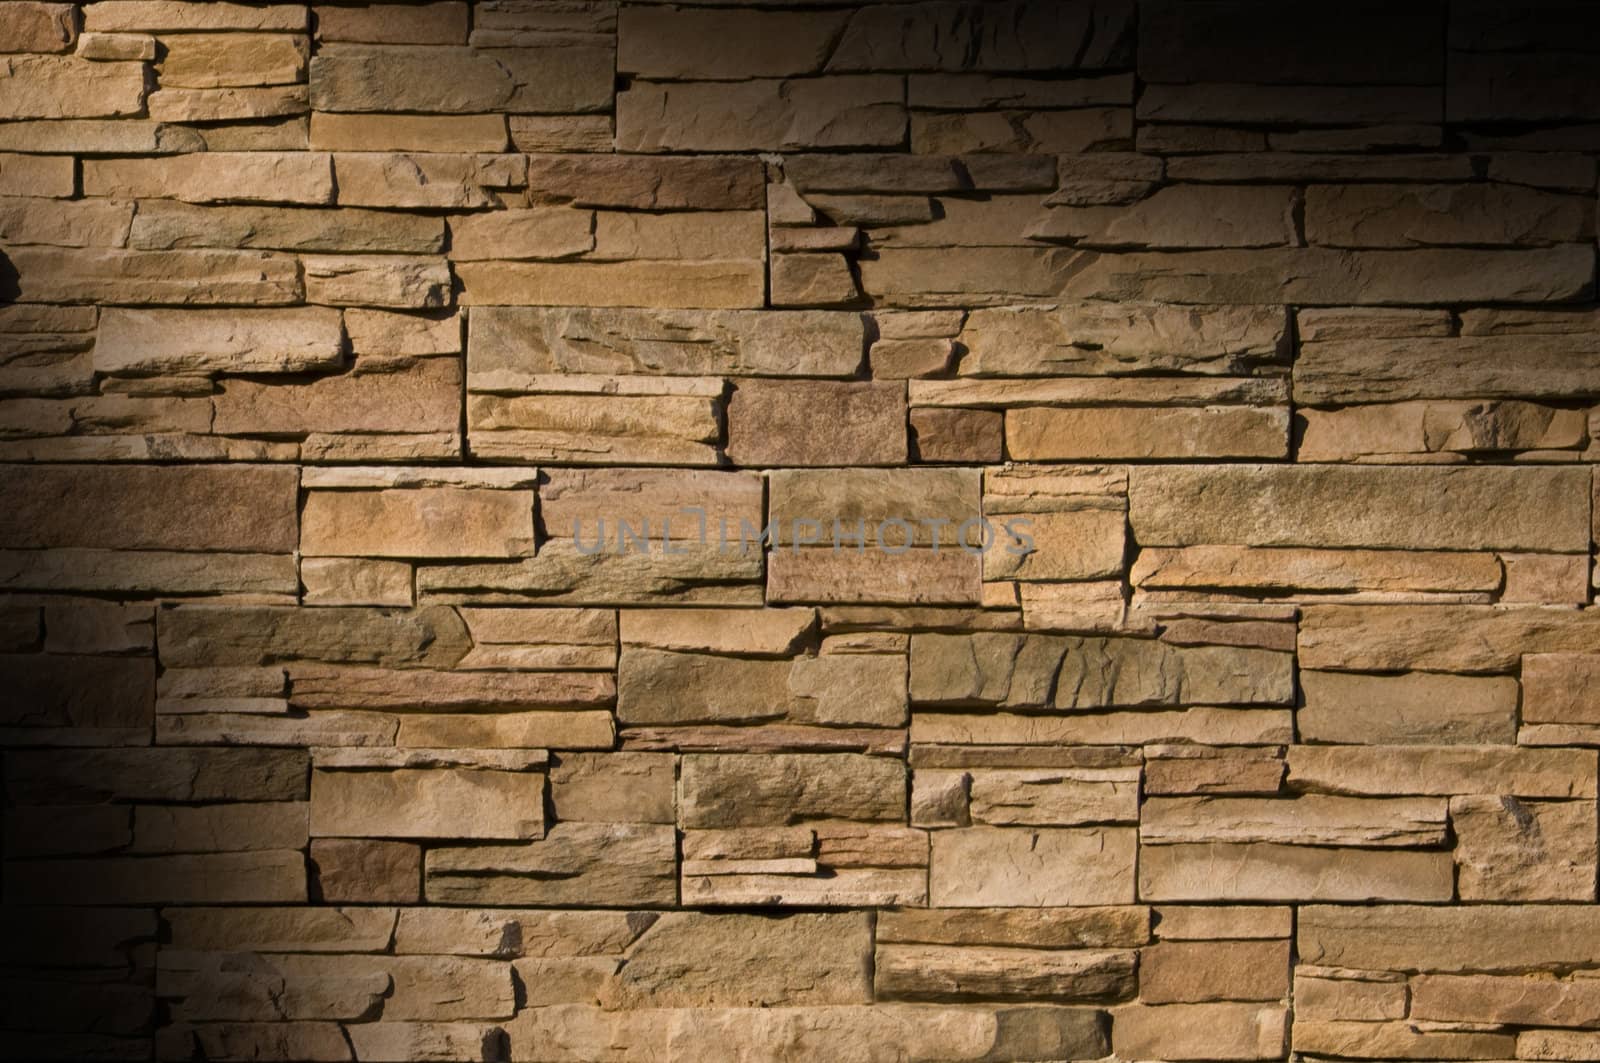 Irregular sized brown bricks with an organic feel, lit diagonally